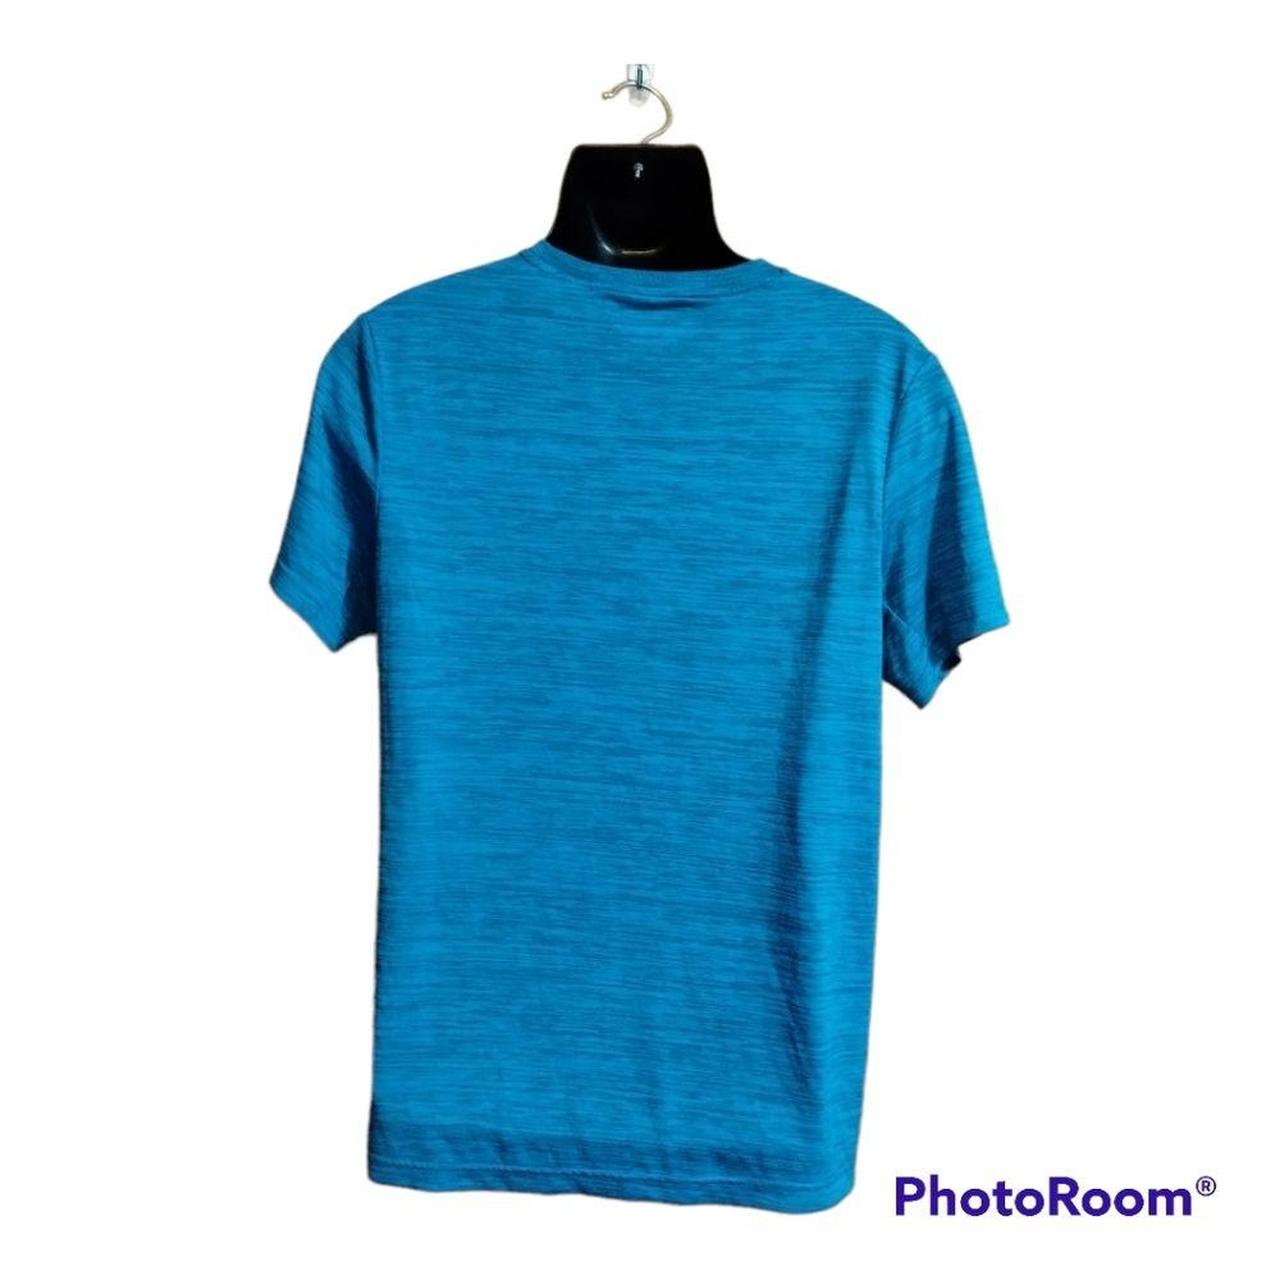 NEW Tek Gear DryTek Blue Shirt